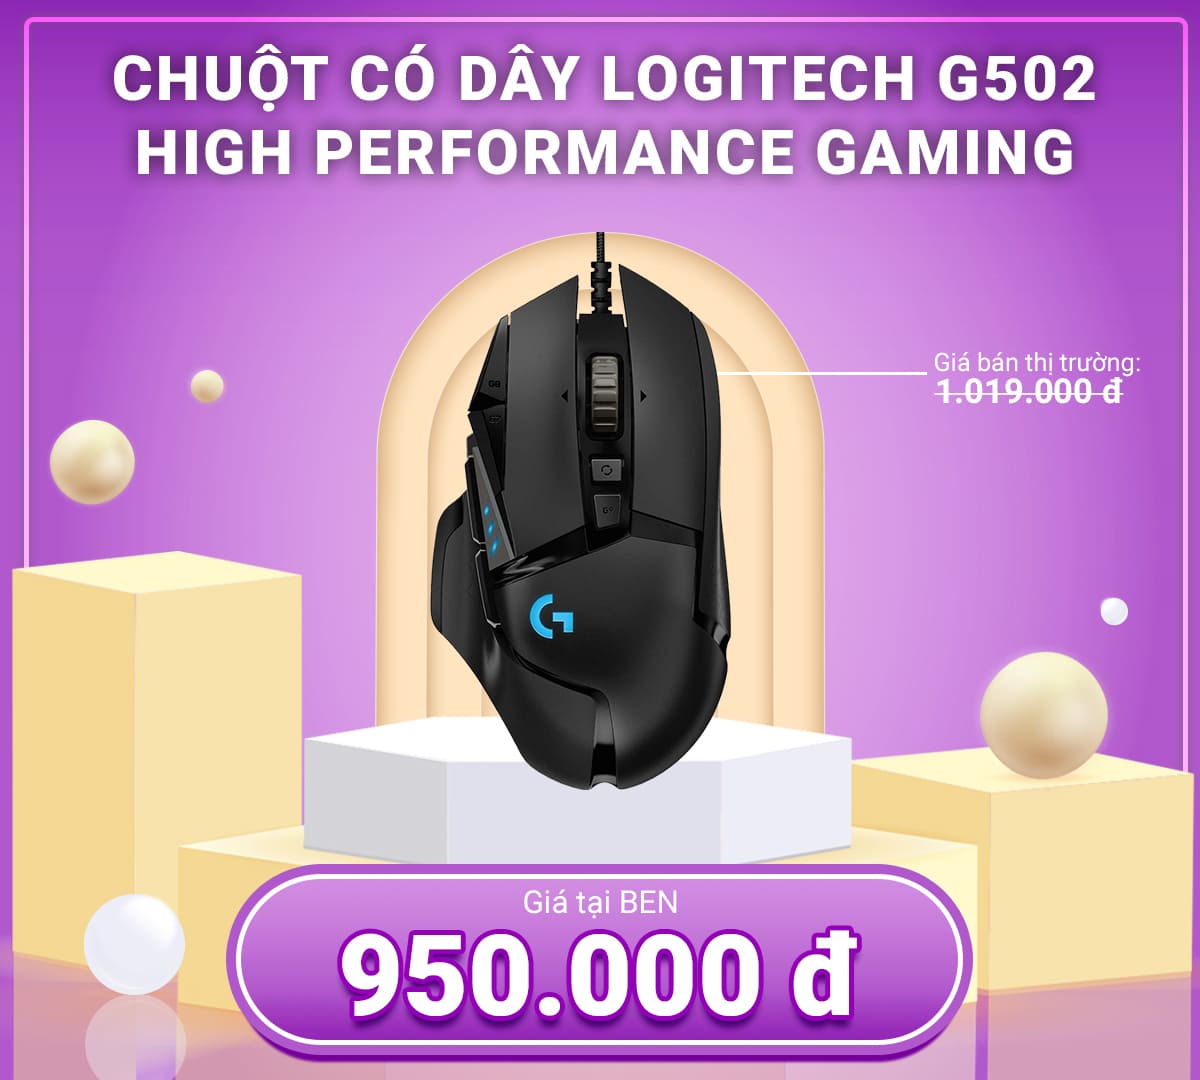 Chuot co day Logitech g502